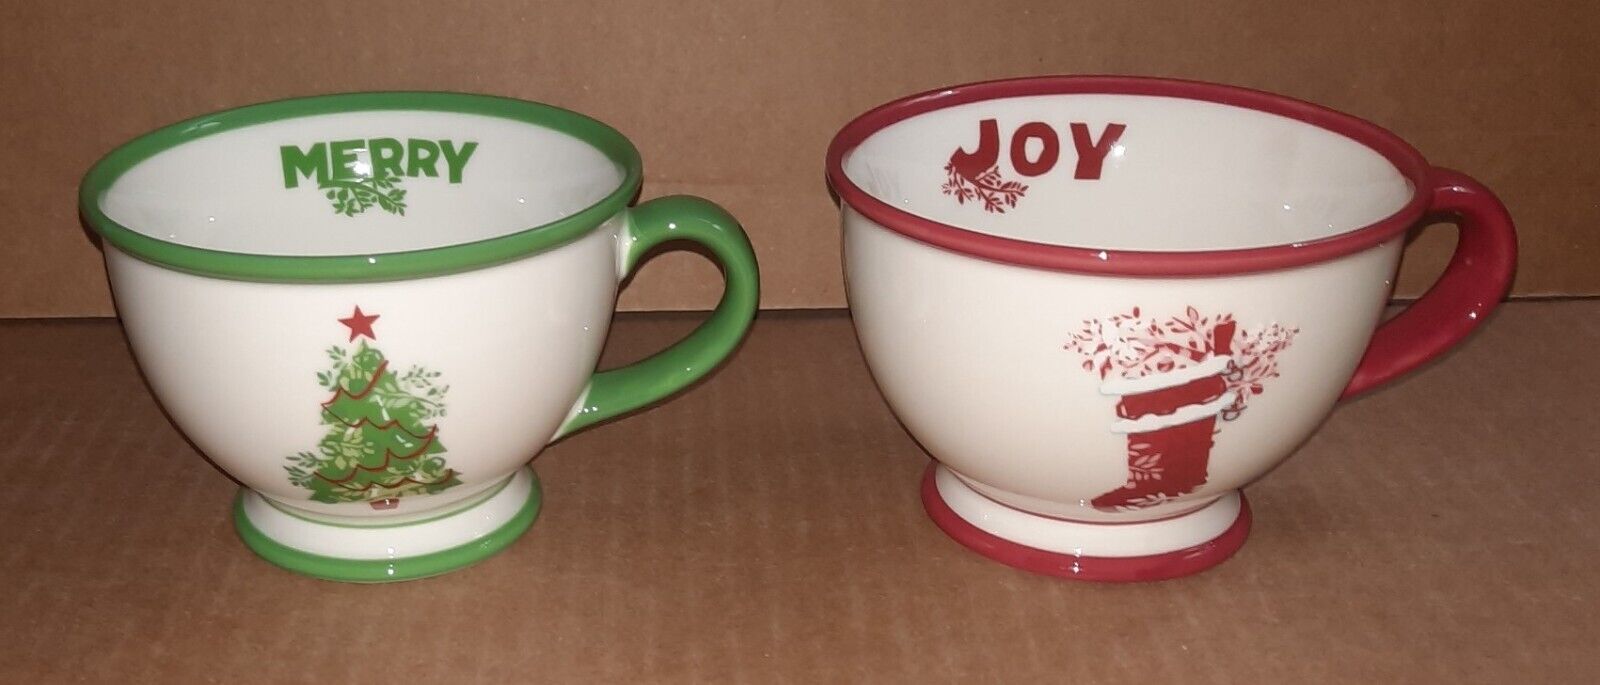 Mugs 2007 Holiday STARBUCKS 10 Oz. CHRISTMAS Joy & Merry